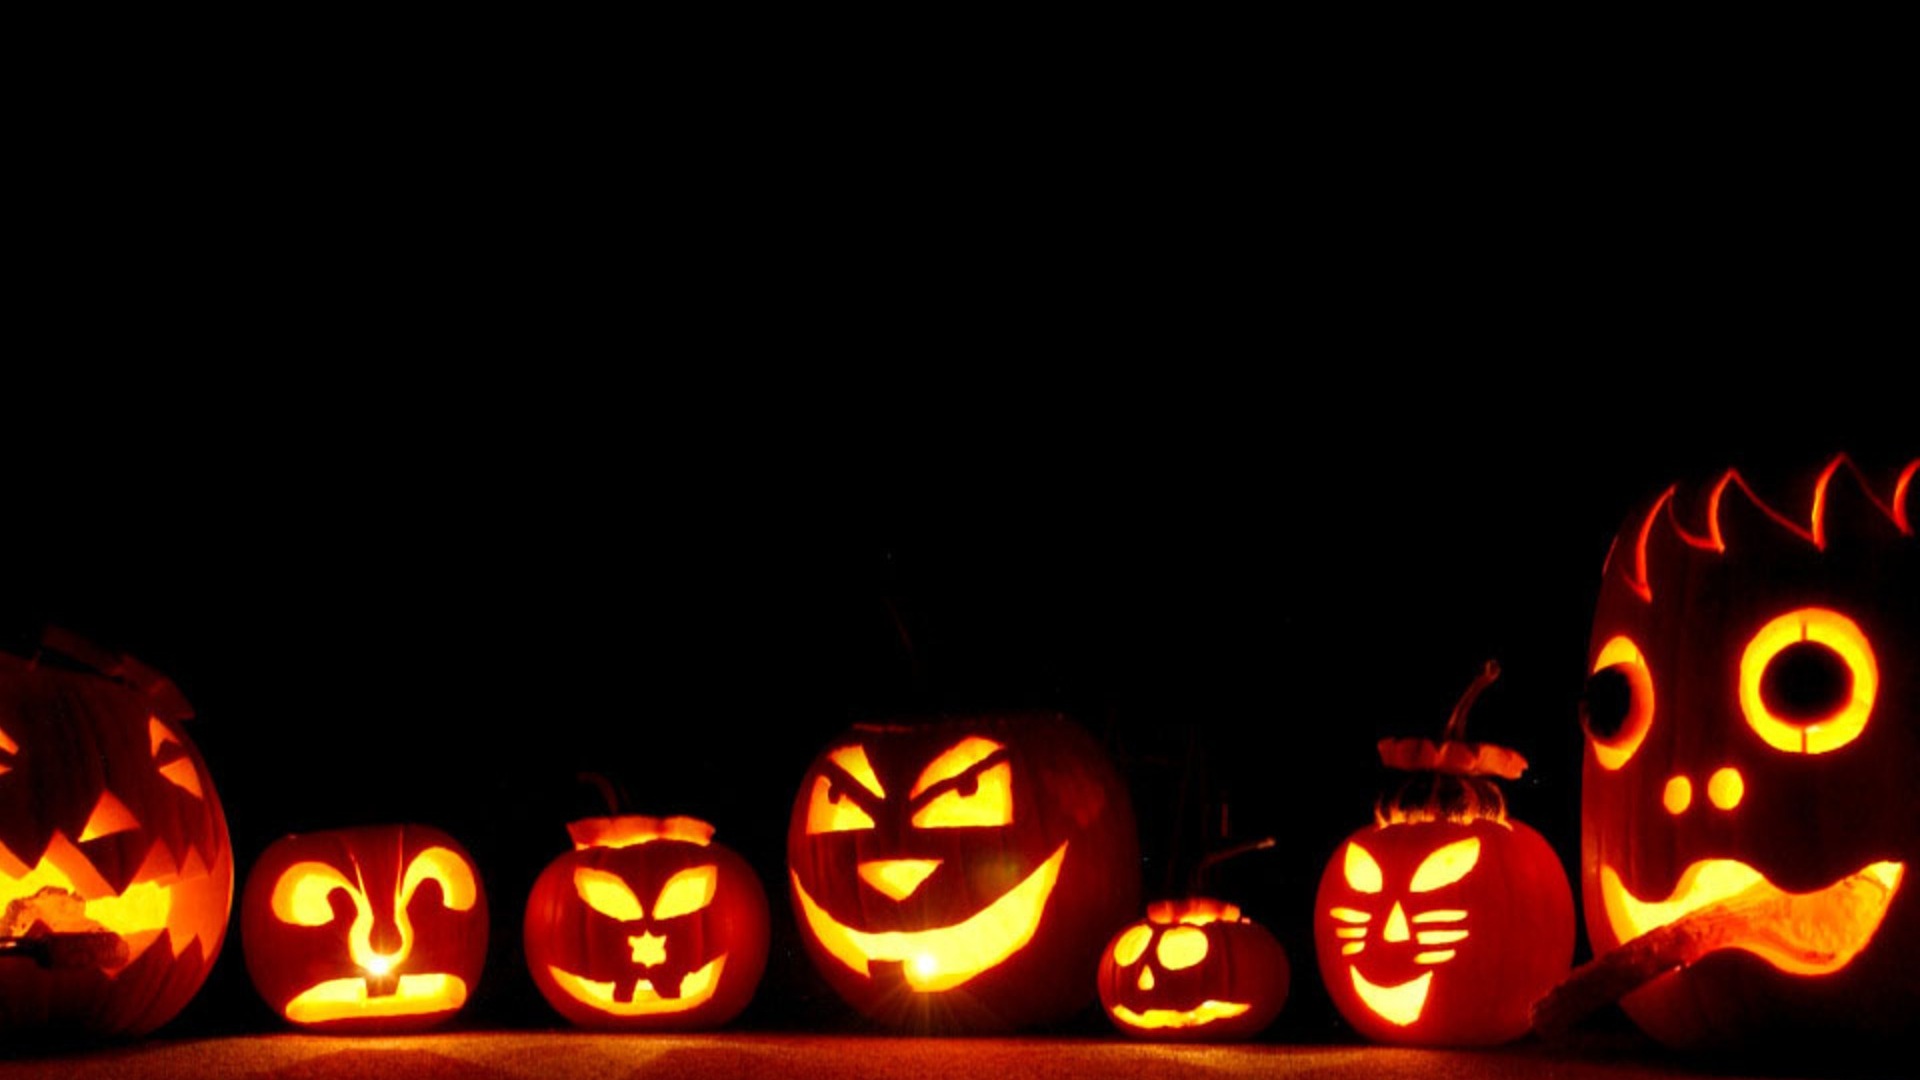 Halloween Desktop Background Image In Collection